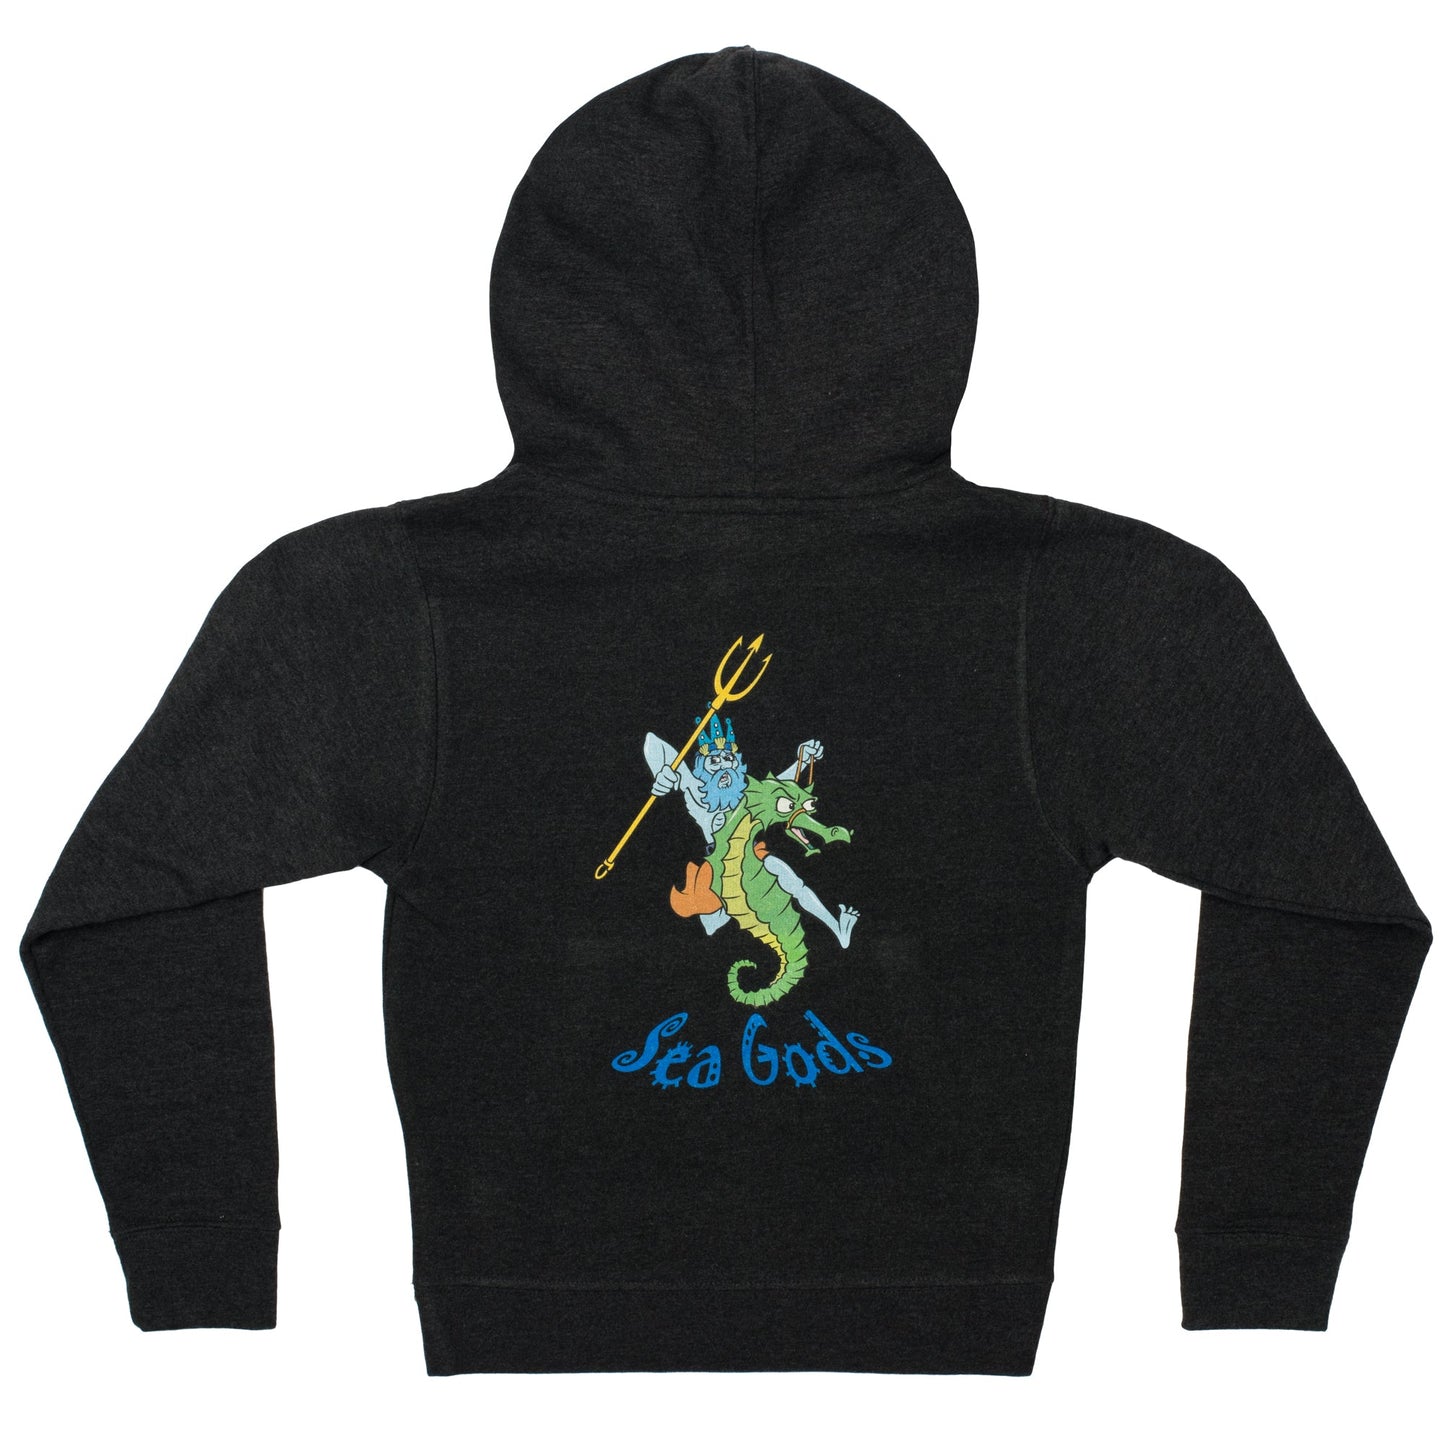 Sea Gods Kids Warm Hooded Sweatshirt